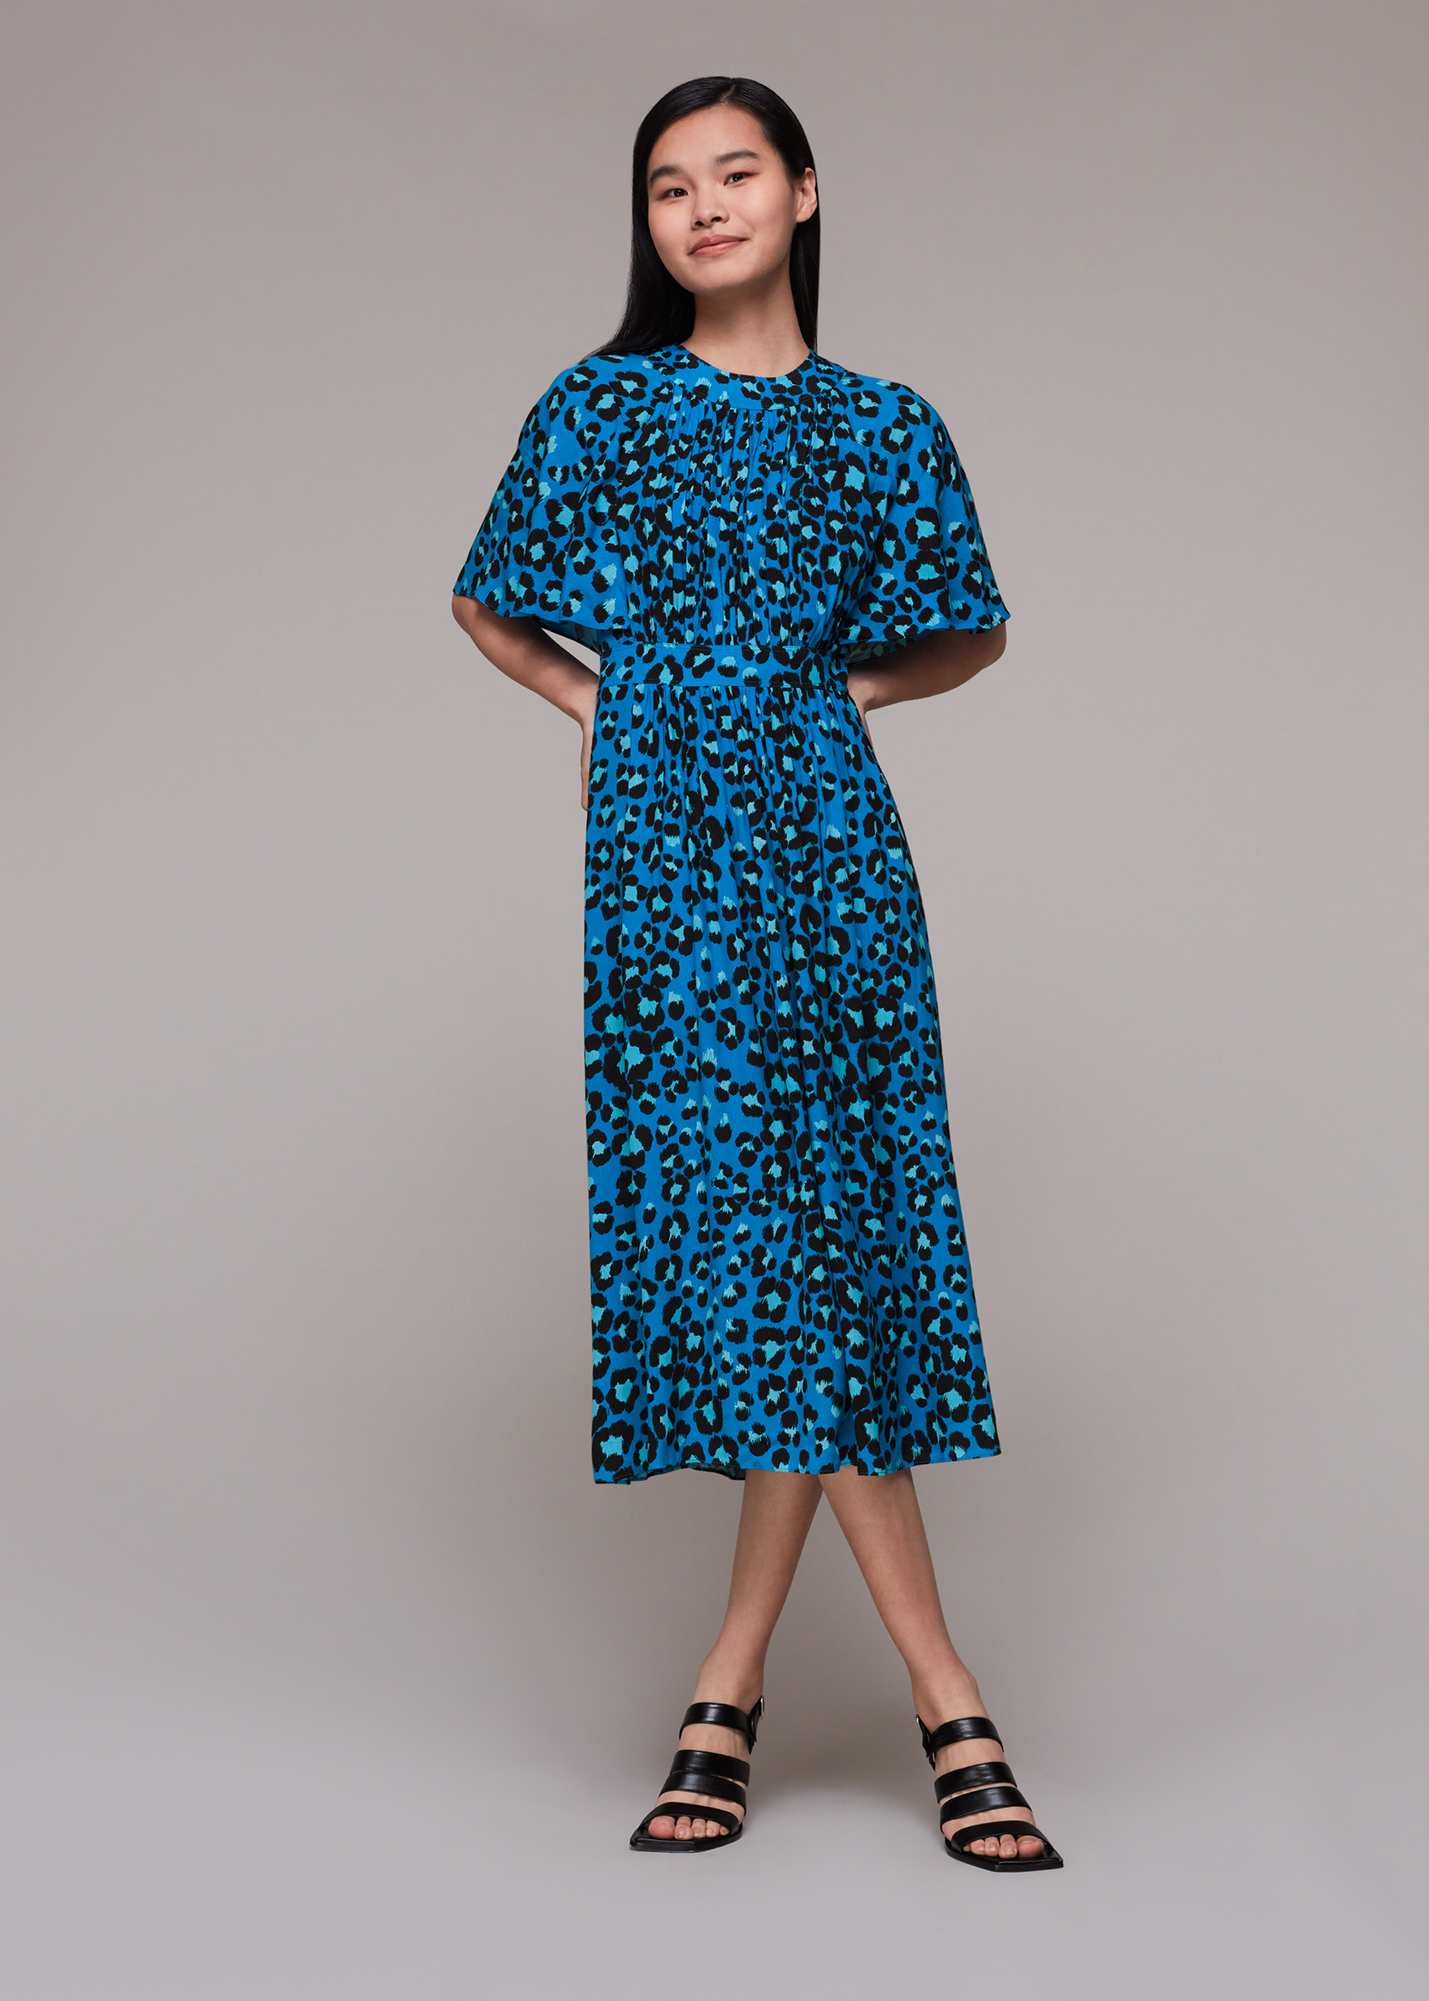 Whistles Women's Painted Leopard Amelia Dress